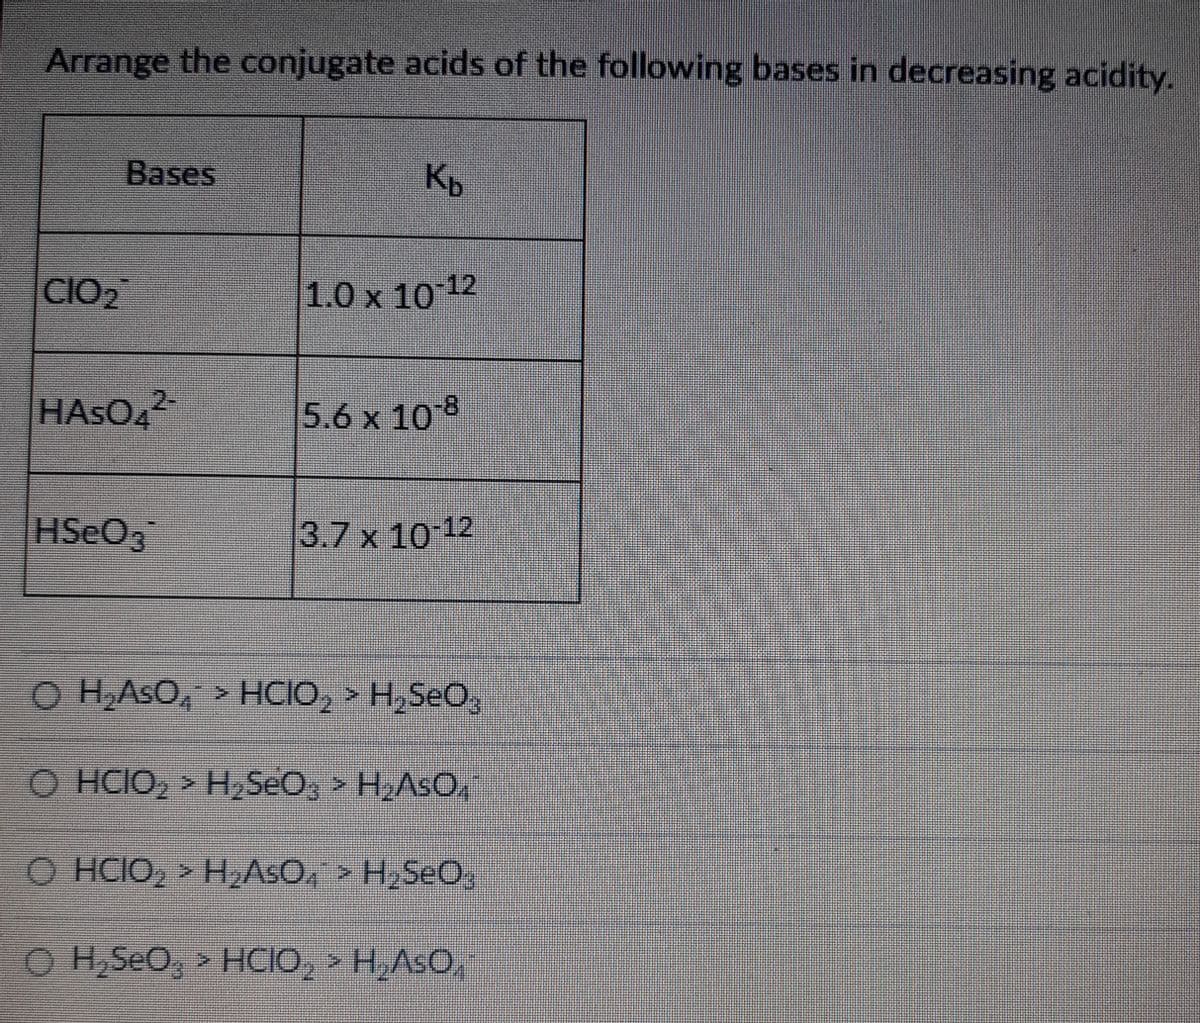 Arrange the conjugate acids of the following bases in decreasing acidity.
Bases
Kb
CIO₂
1.0 x 10-12
HASO4²-
5.6 x 10-8
HSEO3
3.7 x 10-12
O H₂AsO, > HCIO₂ > H₂S₂O3
O HCIO₂ > H₂SeO3 > H₂ASO₁
O HCIO₂ > H₂AsOл¹ > H₂SеO
O H₂SeO3 > HCIO₂ > H₂ASO,